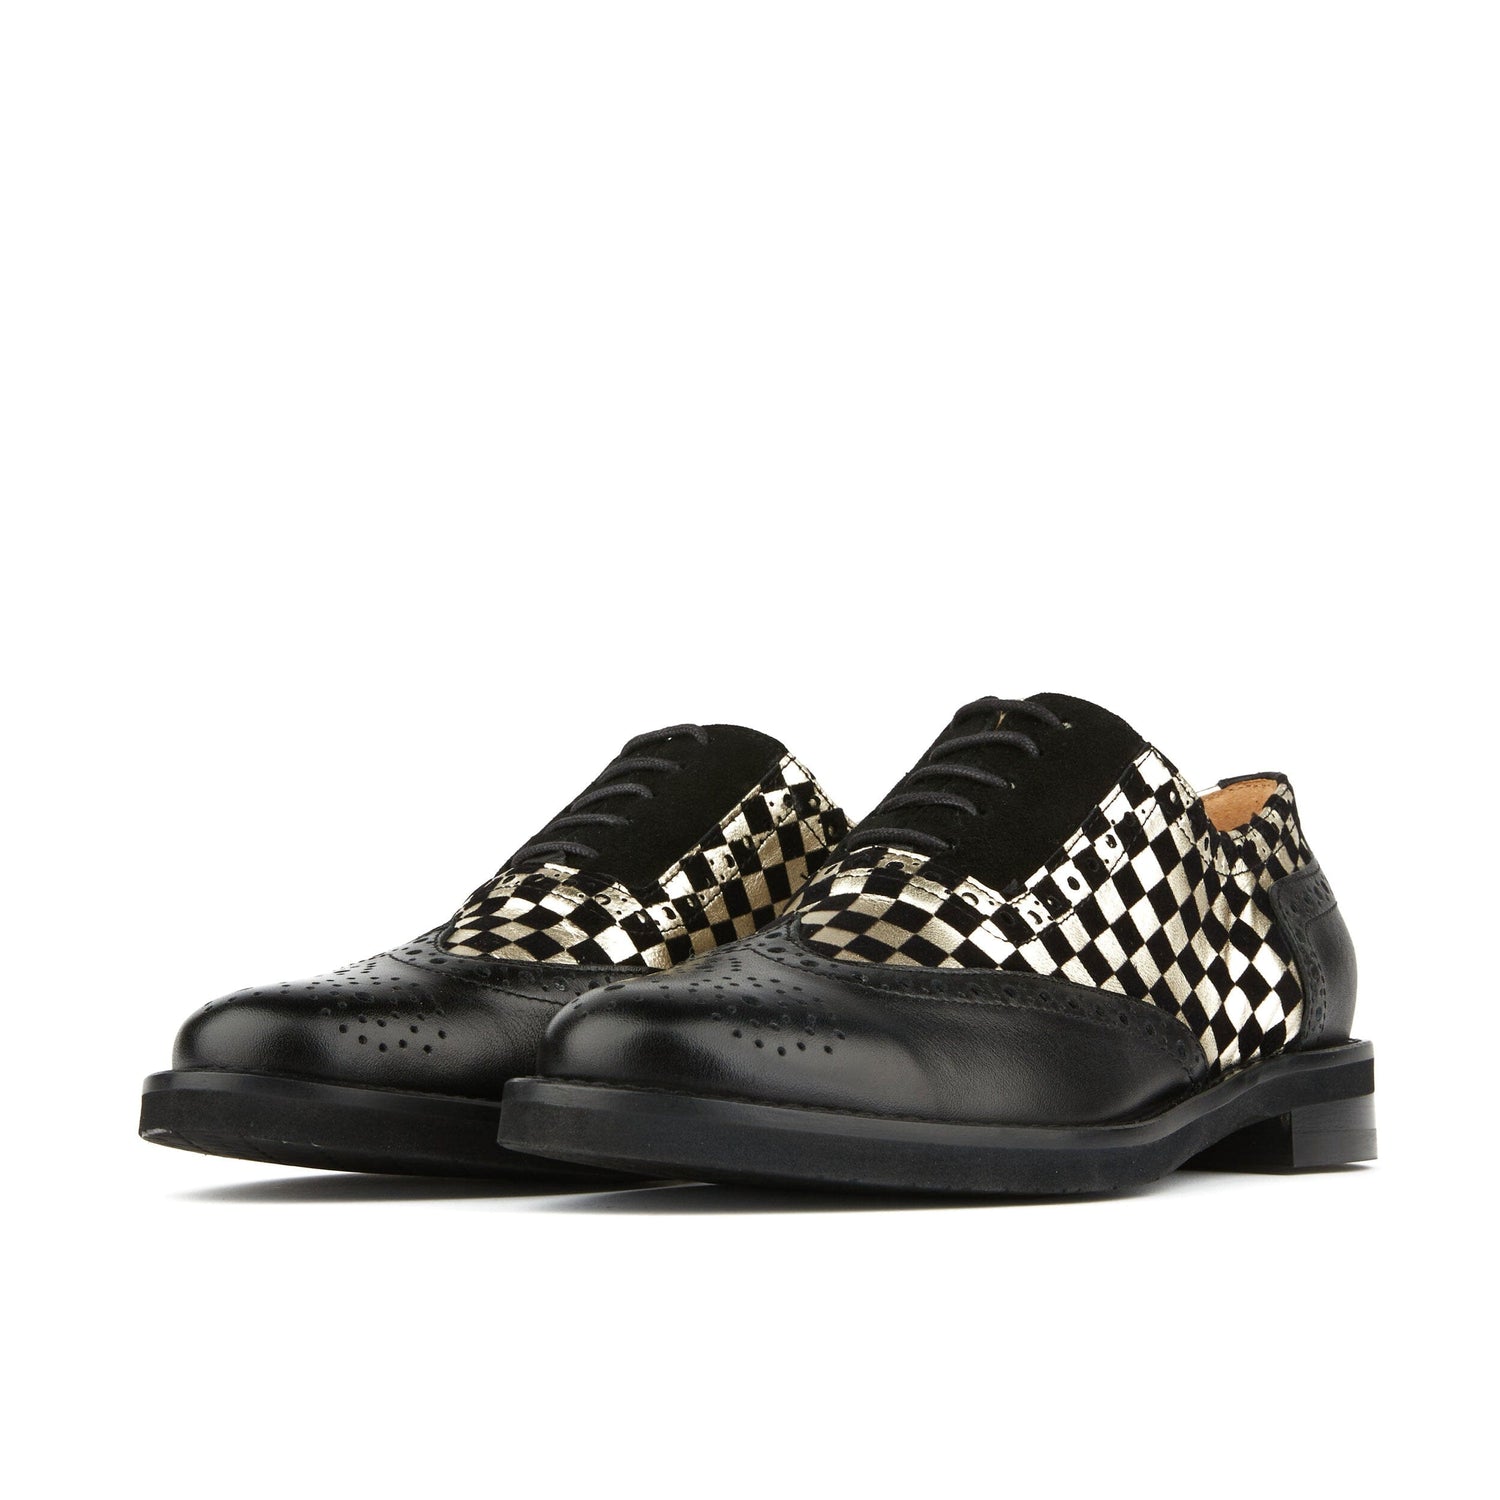 Vivienne - Black & White Check Womens Shoes Embassy London 